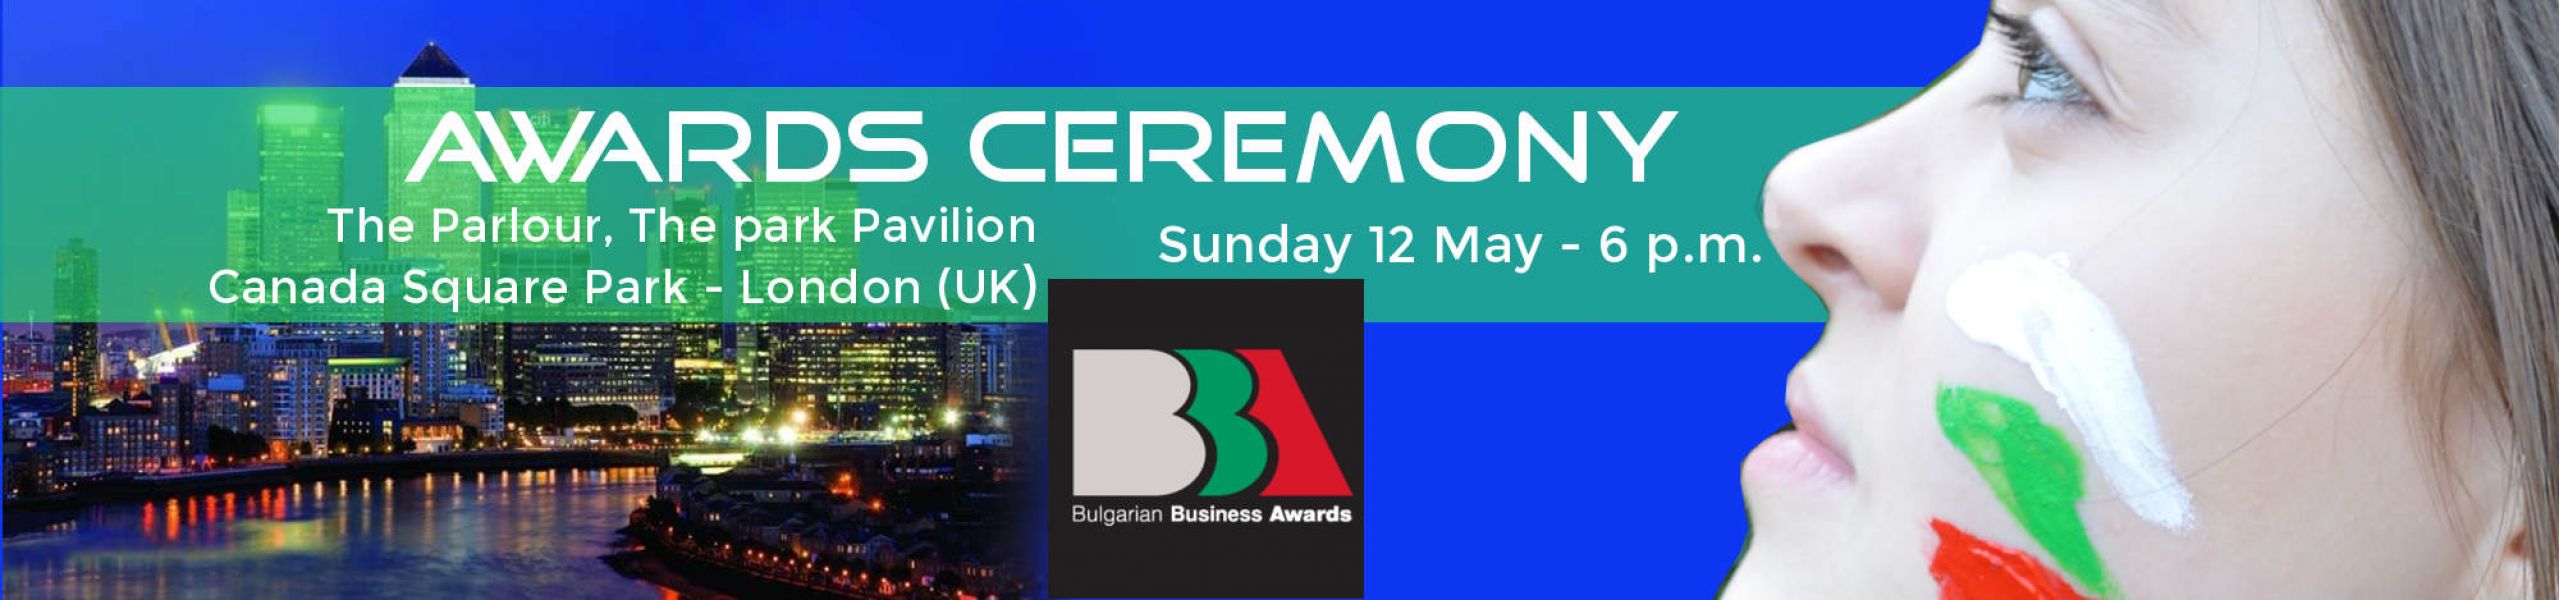 Bulgarian Business Ceremony Awards 2019 - London - Elisa Neri